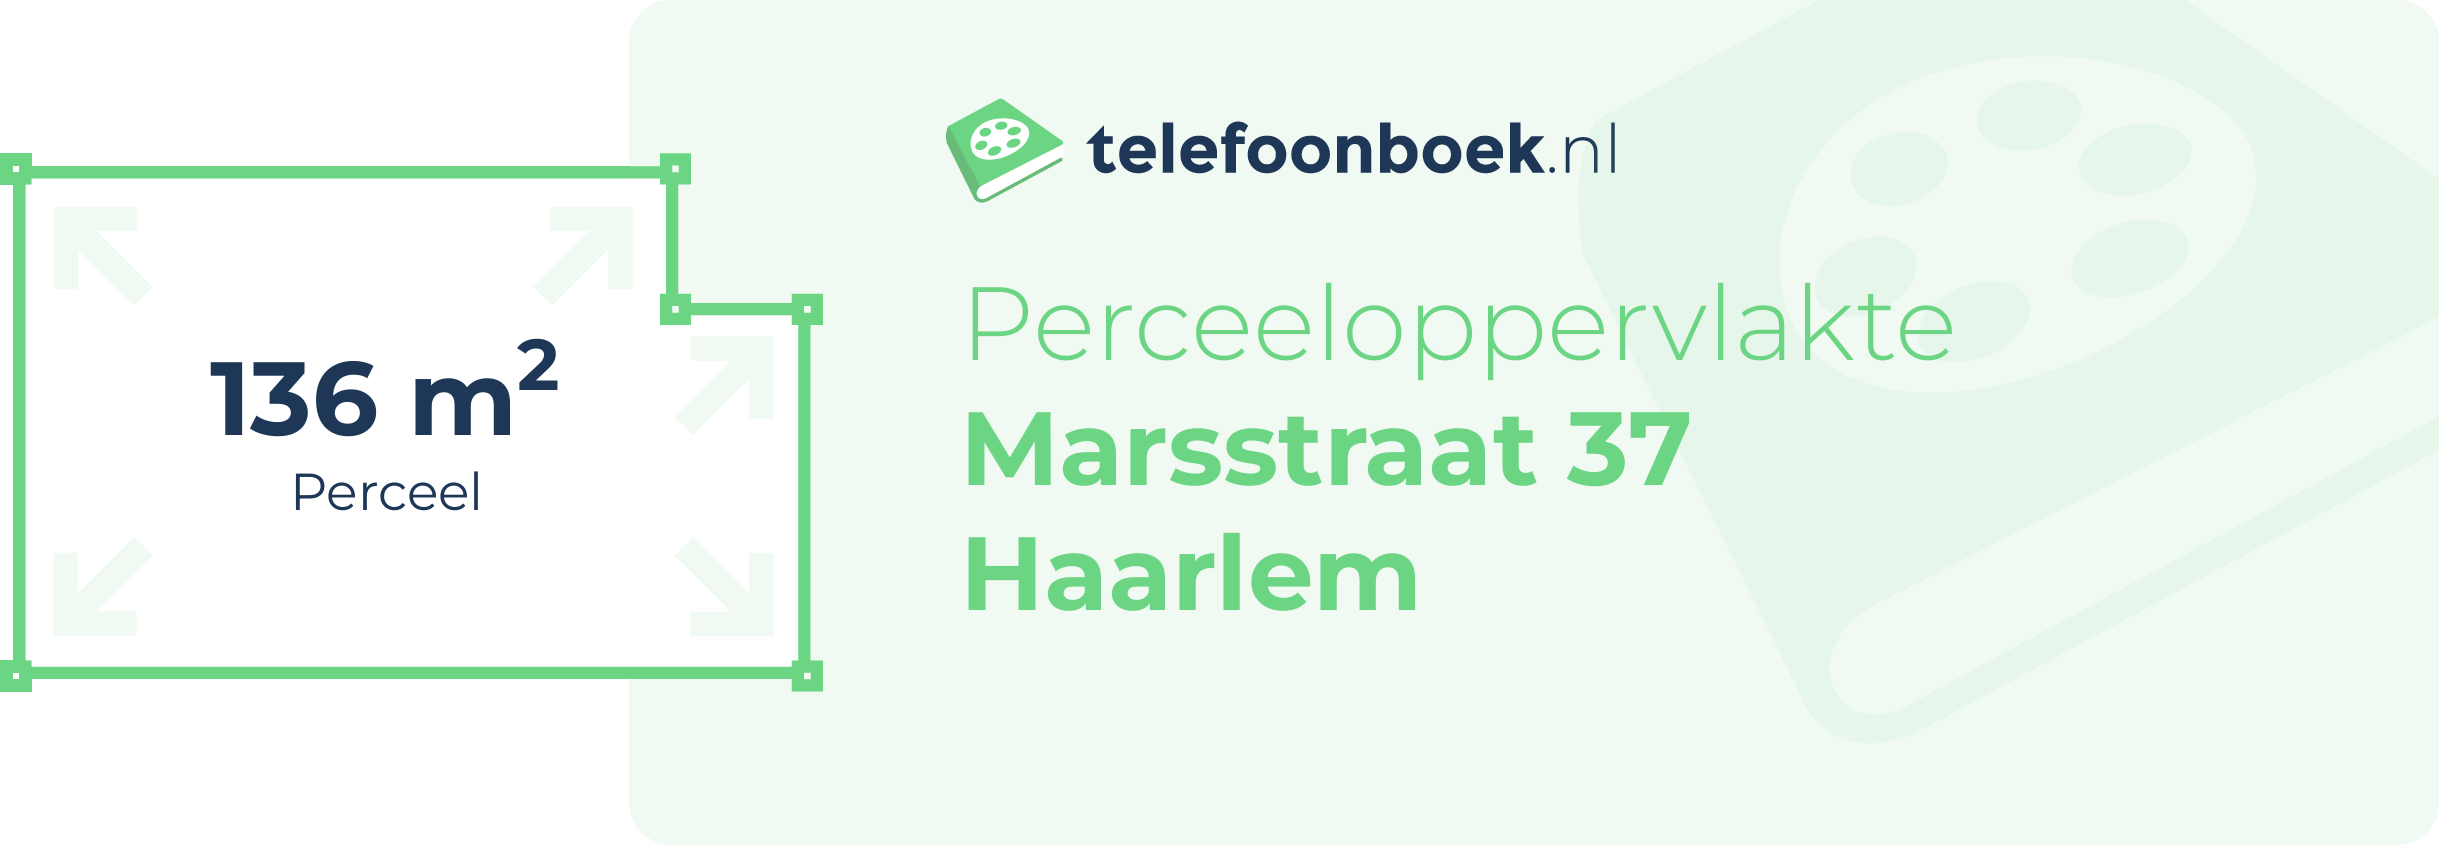 Perceeloppervlakte Marsstraat 37 Haarlem